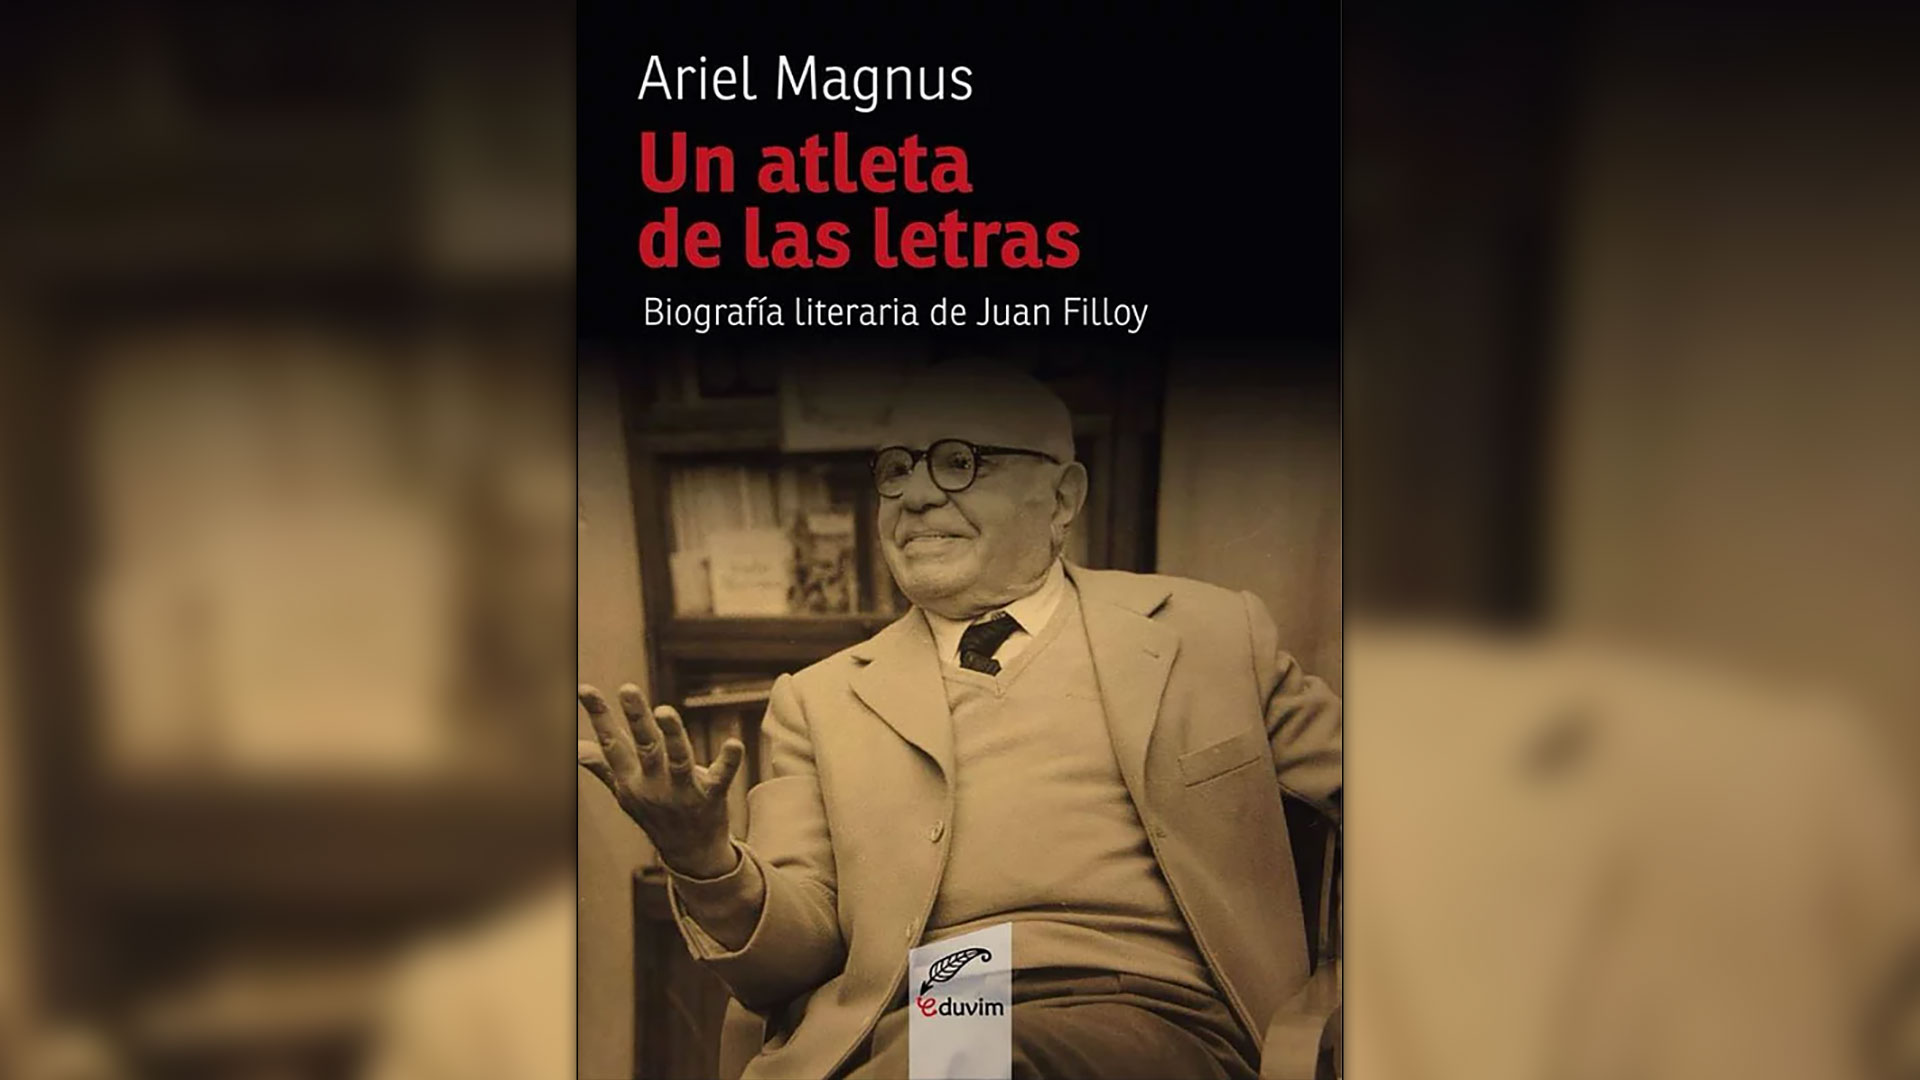 "Un atleta de las letras", la vida de Juan Filloy según Ariel Magnus